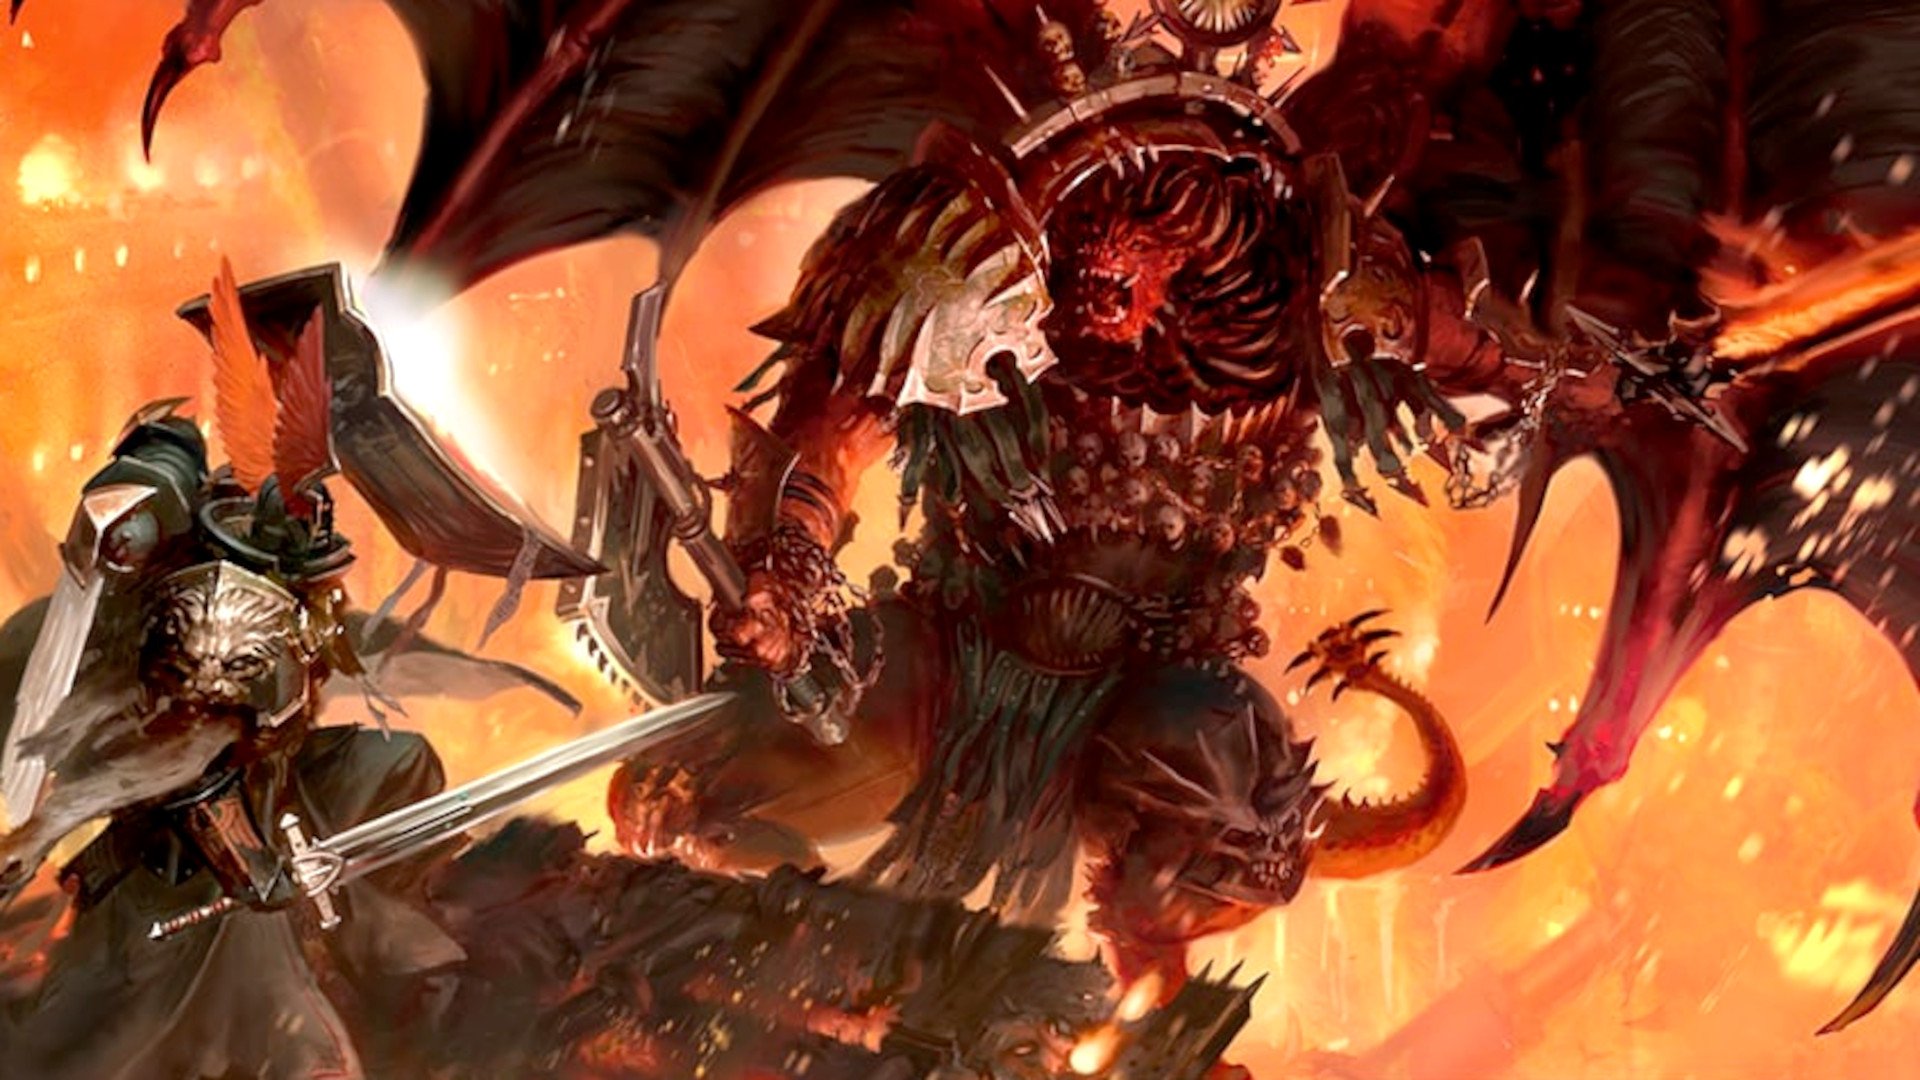 Warhammer 40k primarchs guide - Games Workshop artwork showing the revived Lion El'Jonson fighting the Daemon Primarch Angron